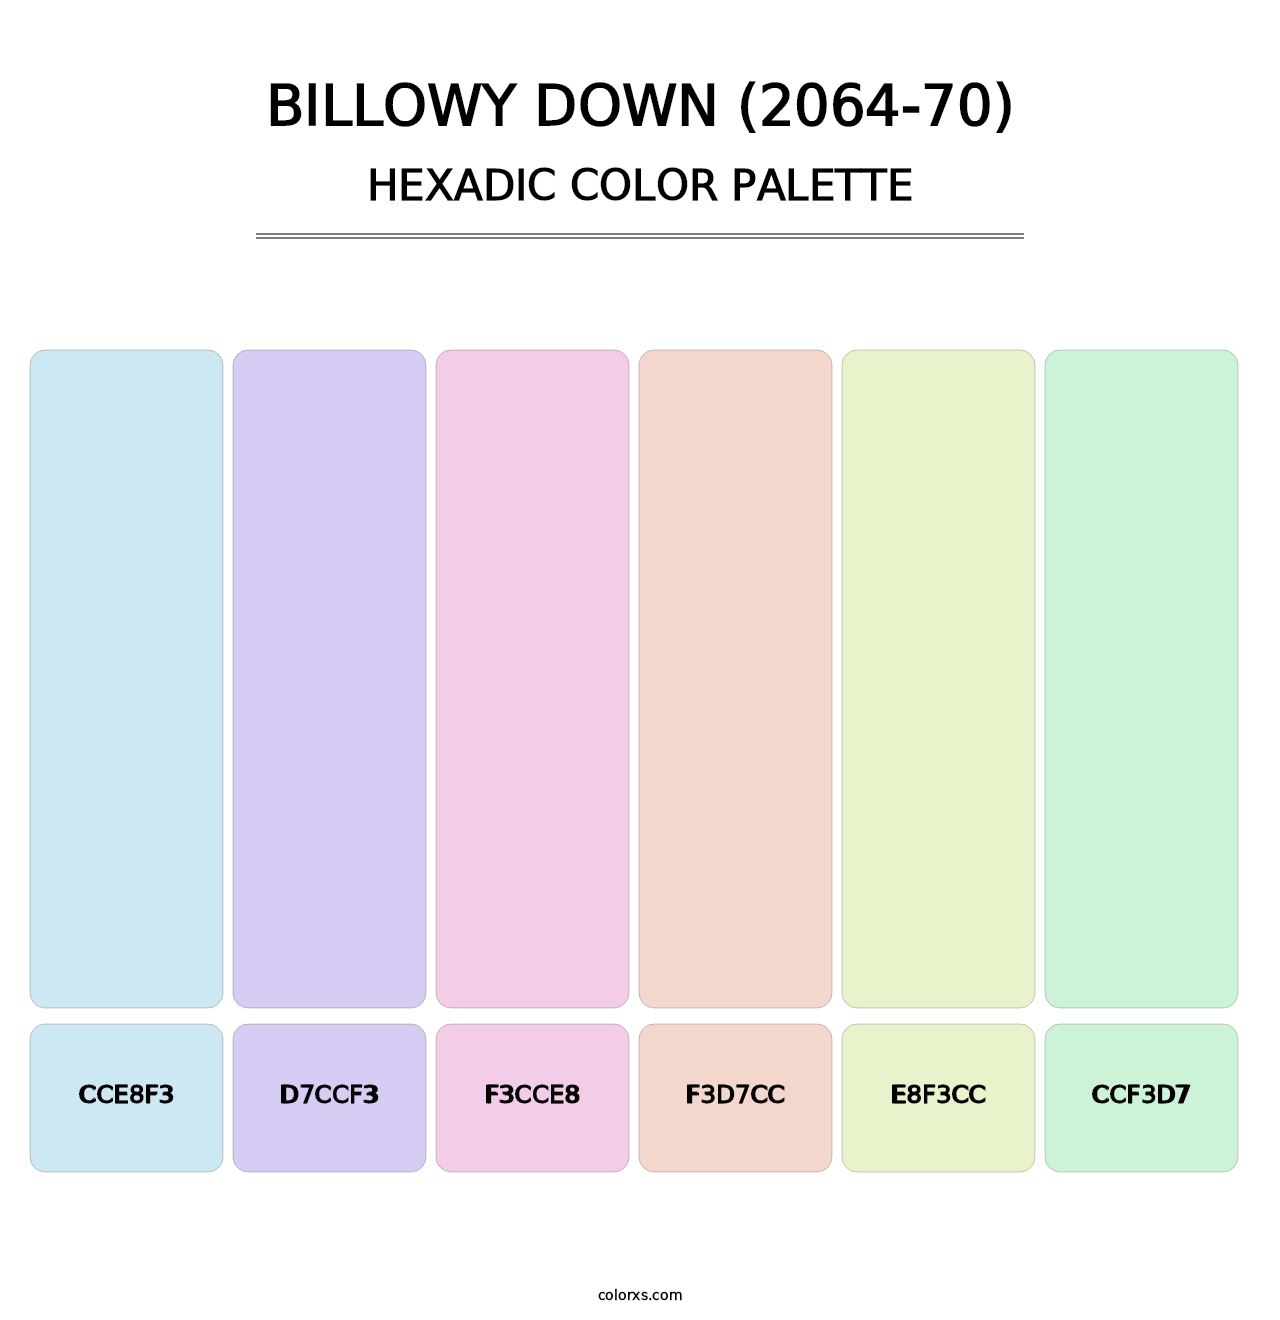 Billowy Down (2064-70) - Hexadic Color Palette